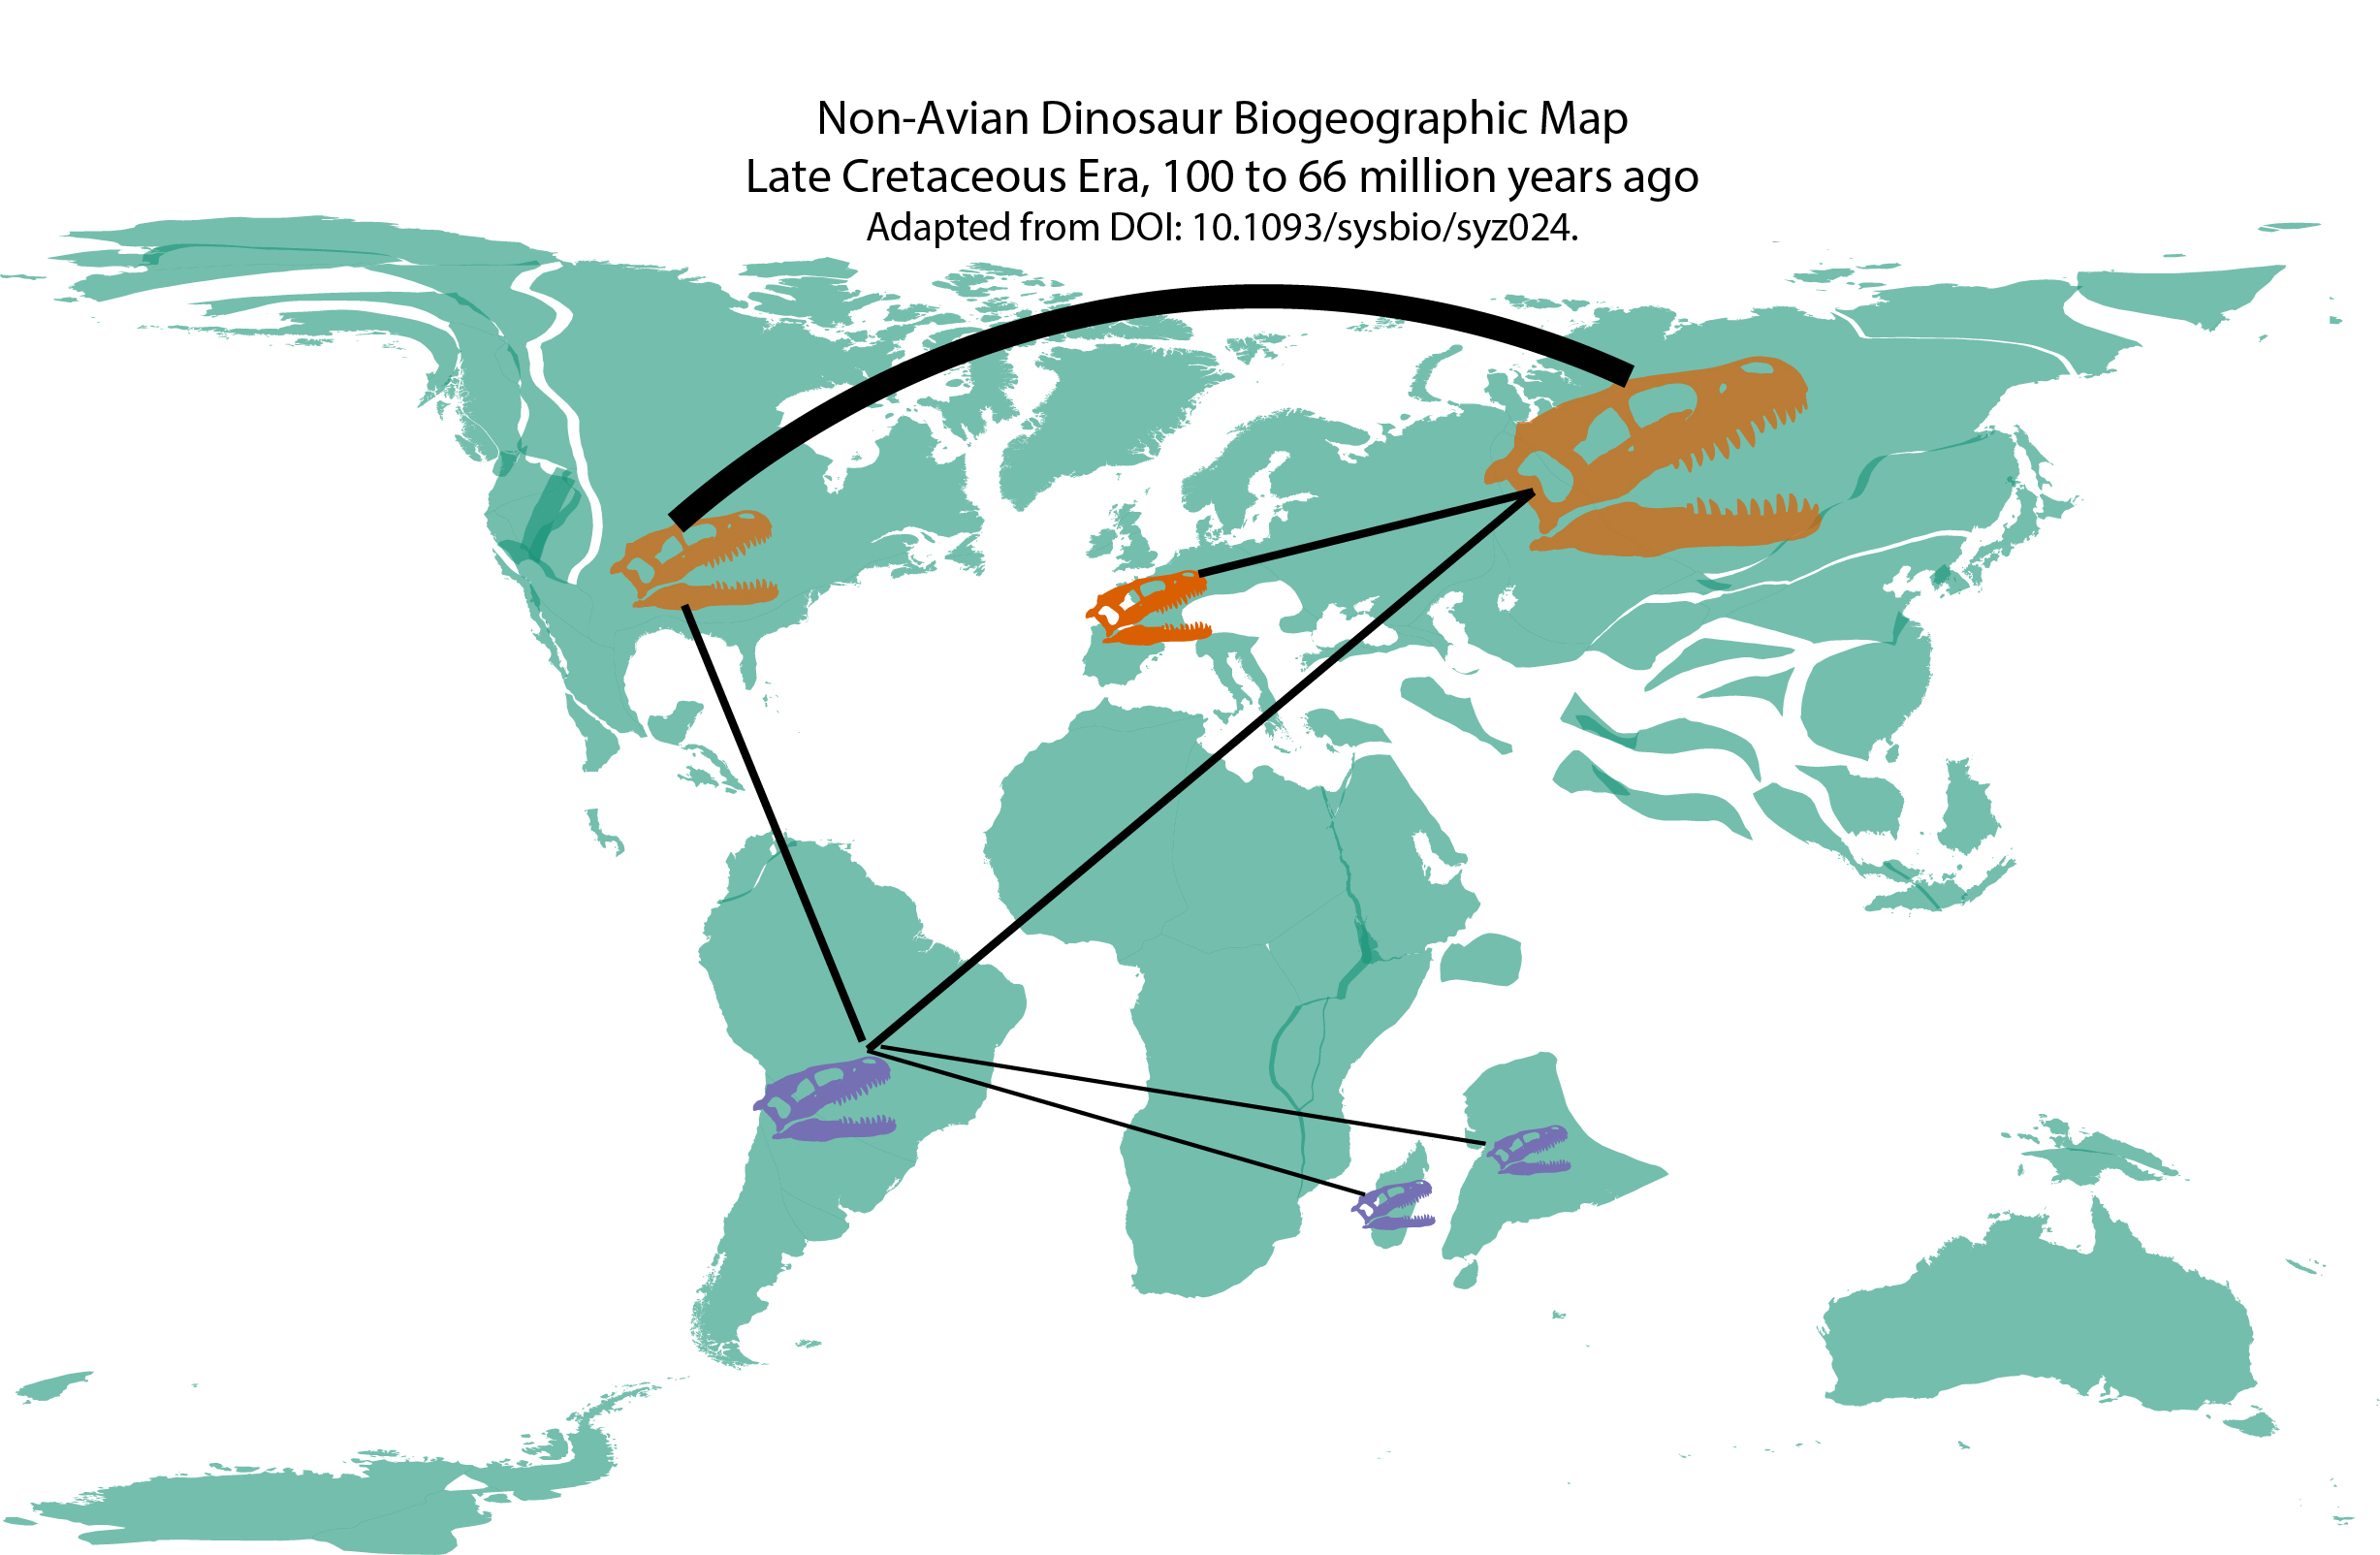 Late cretaceous biogeographical map of nonavian dinosaurs.